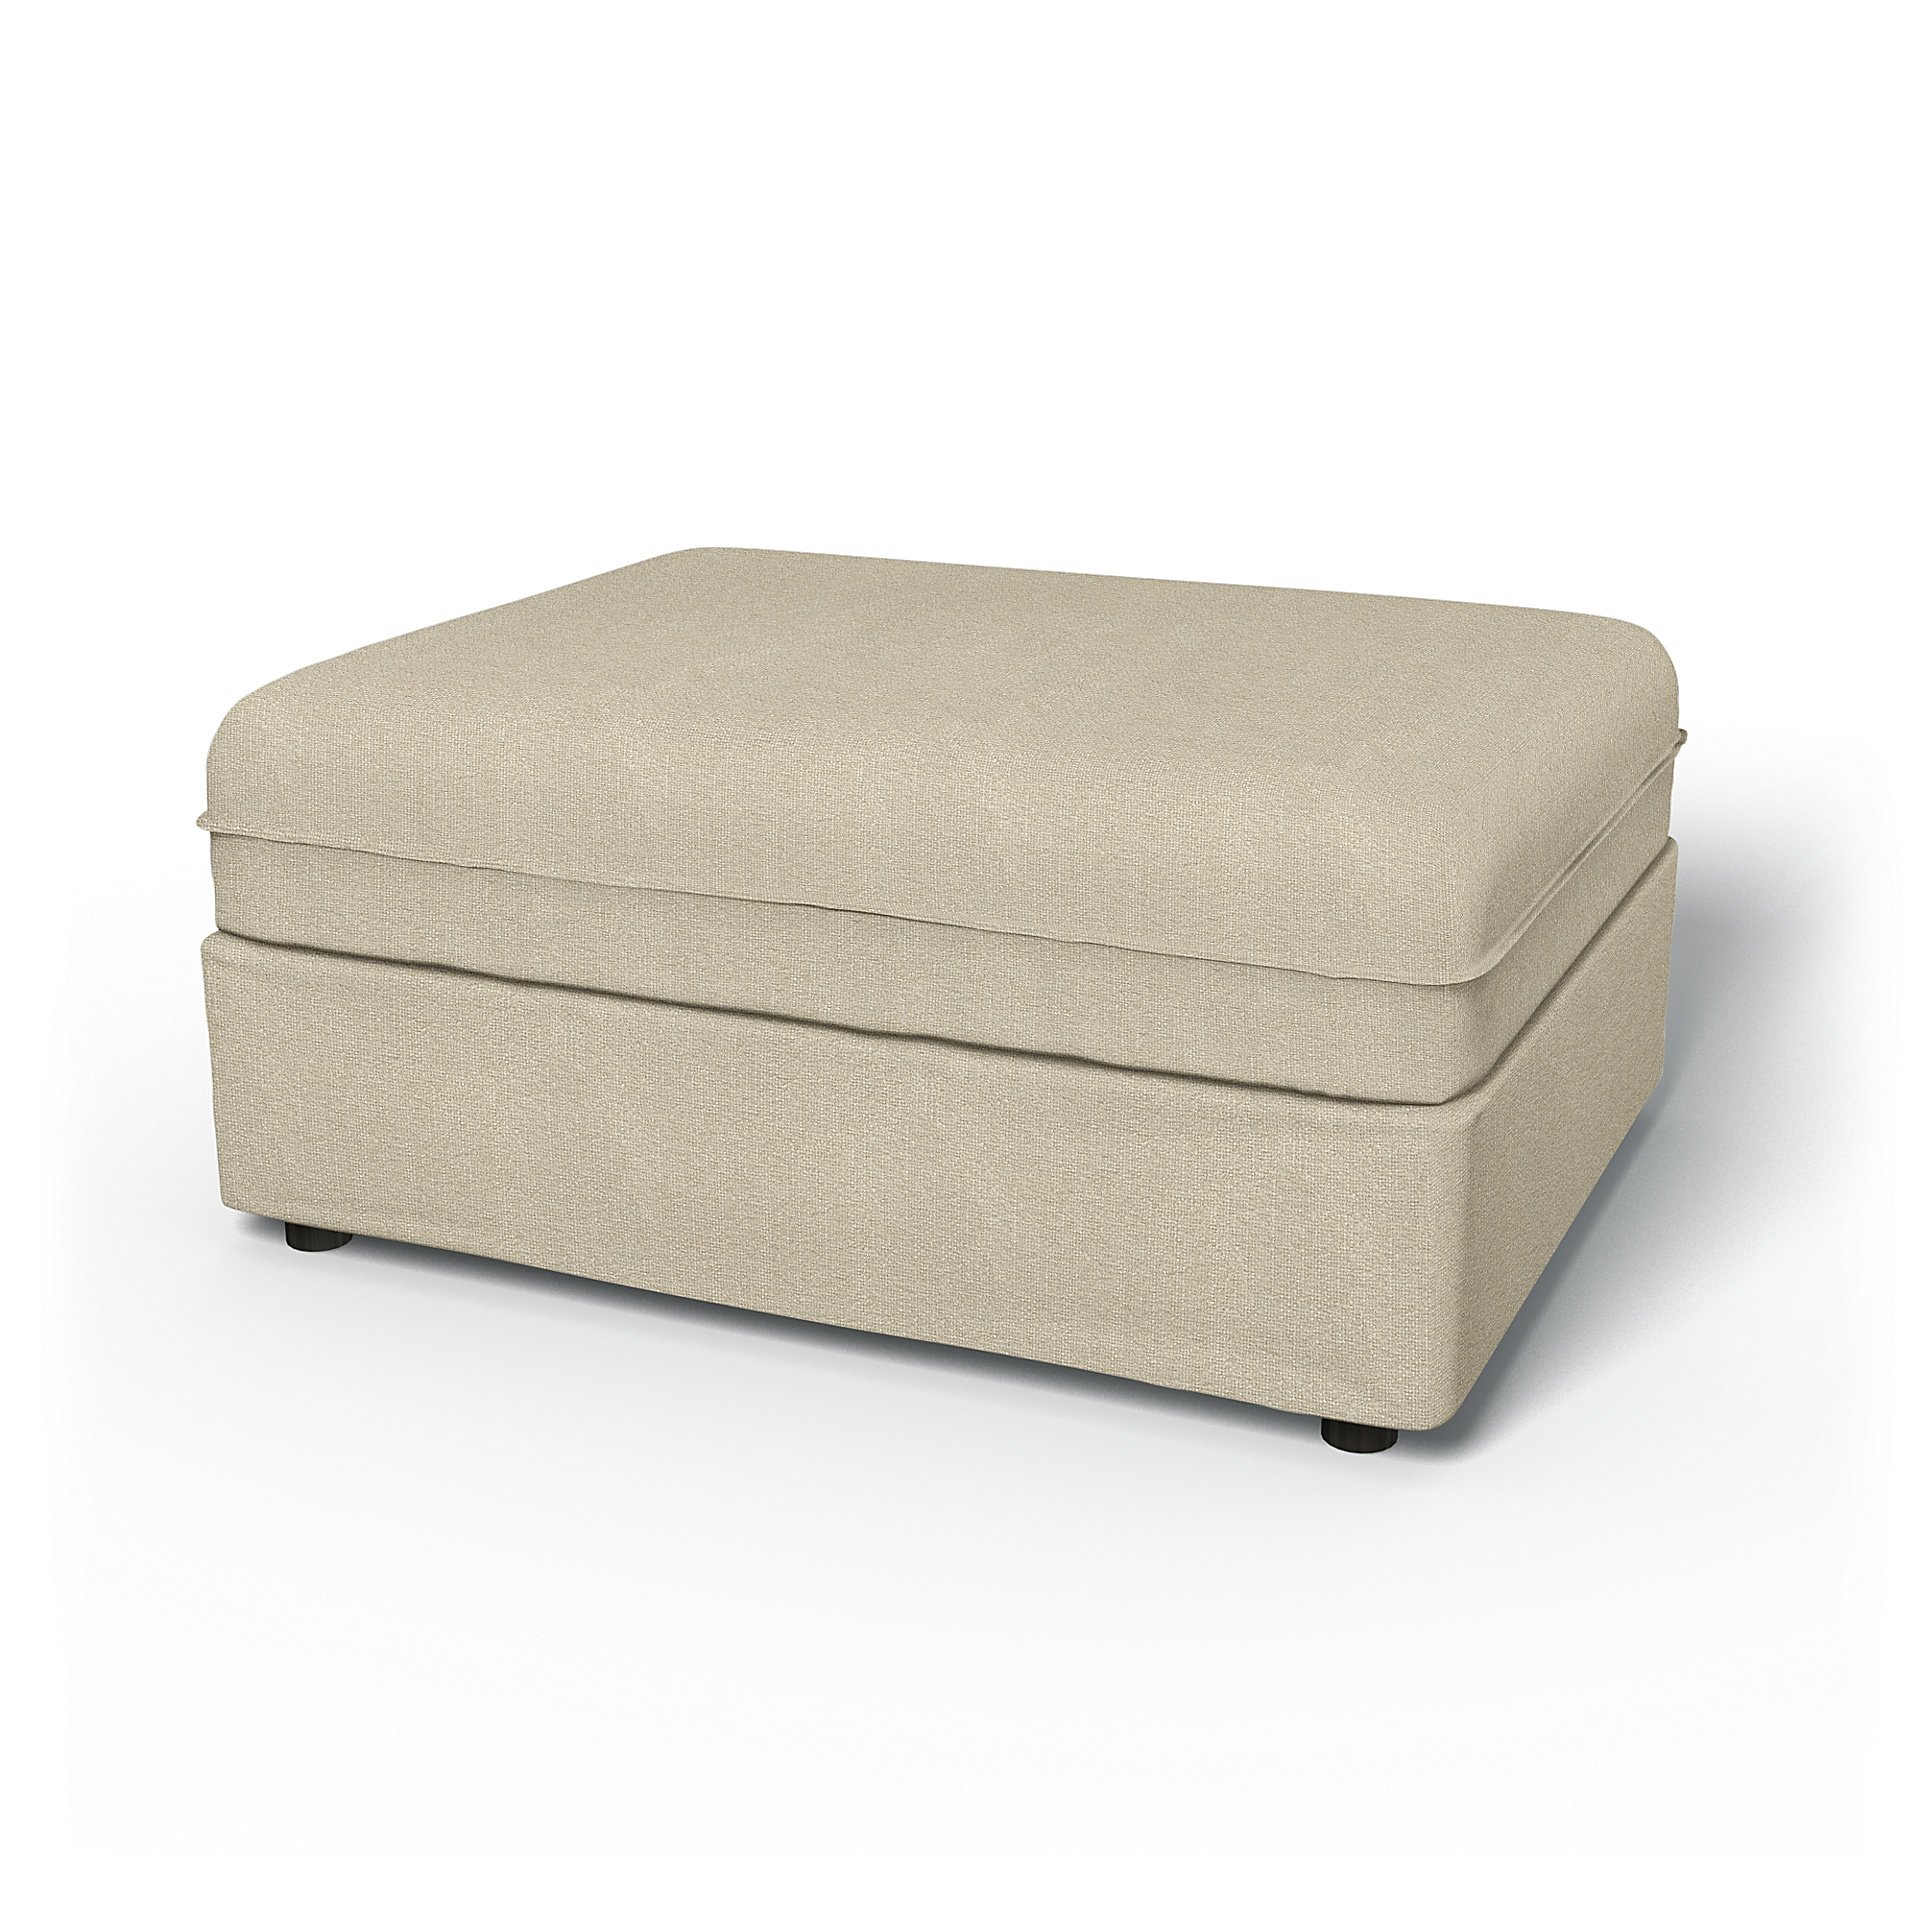 IKEA - Vallentuna Seat Module Cover 100x80cm 39x32in, Cream, Boucle & Texture - Bemz